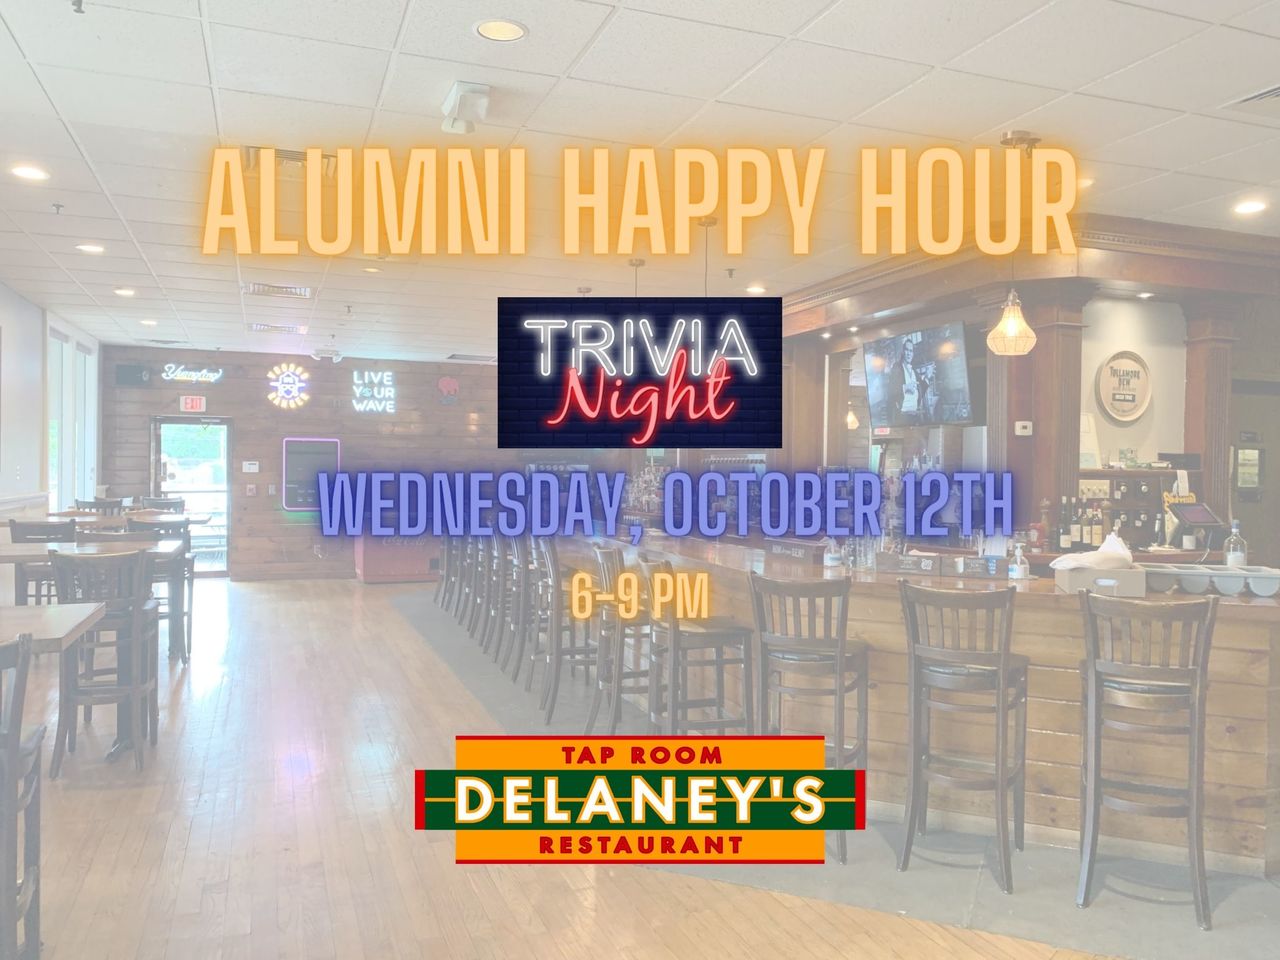 Alumni Happy Hour and Trivia Night at Delaneys